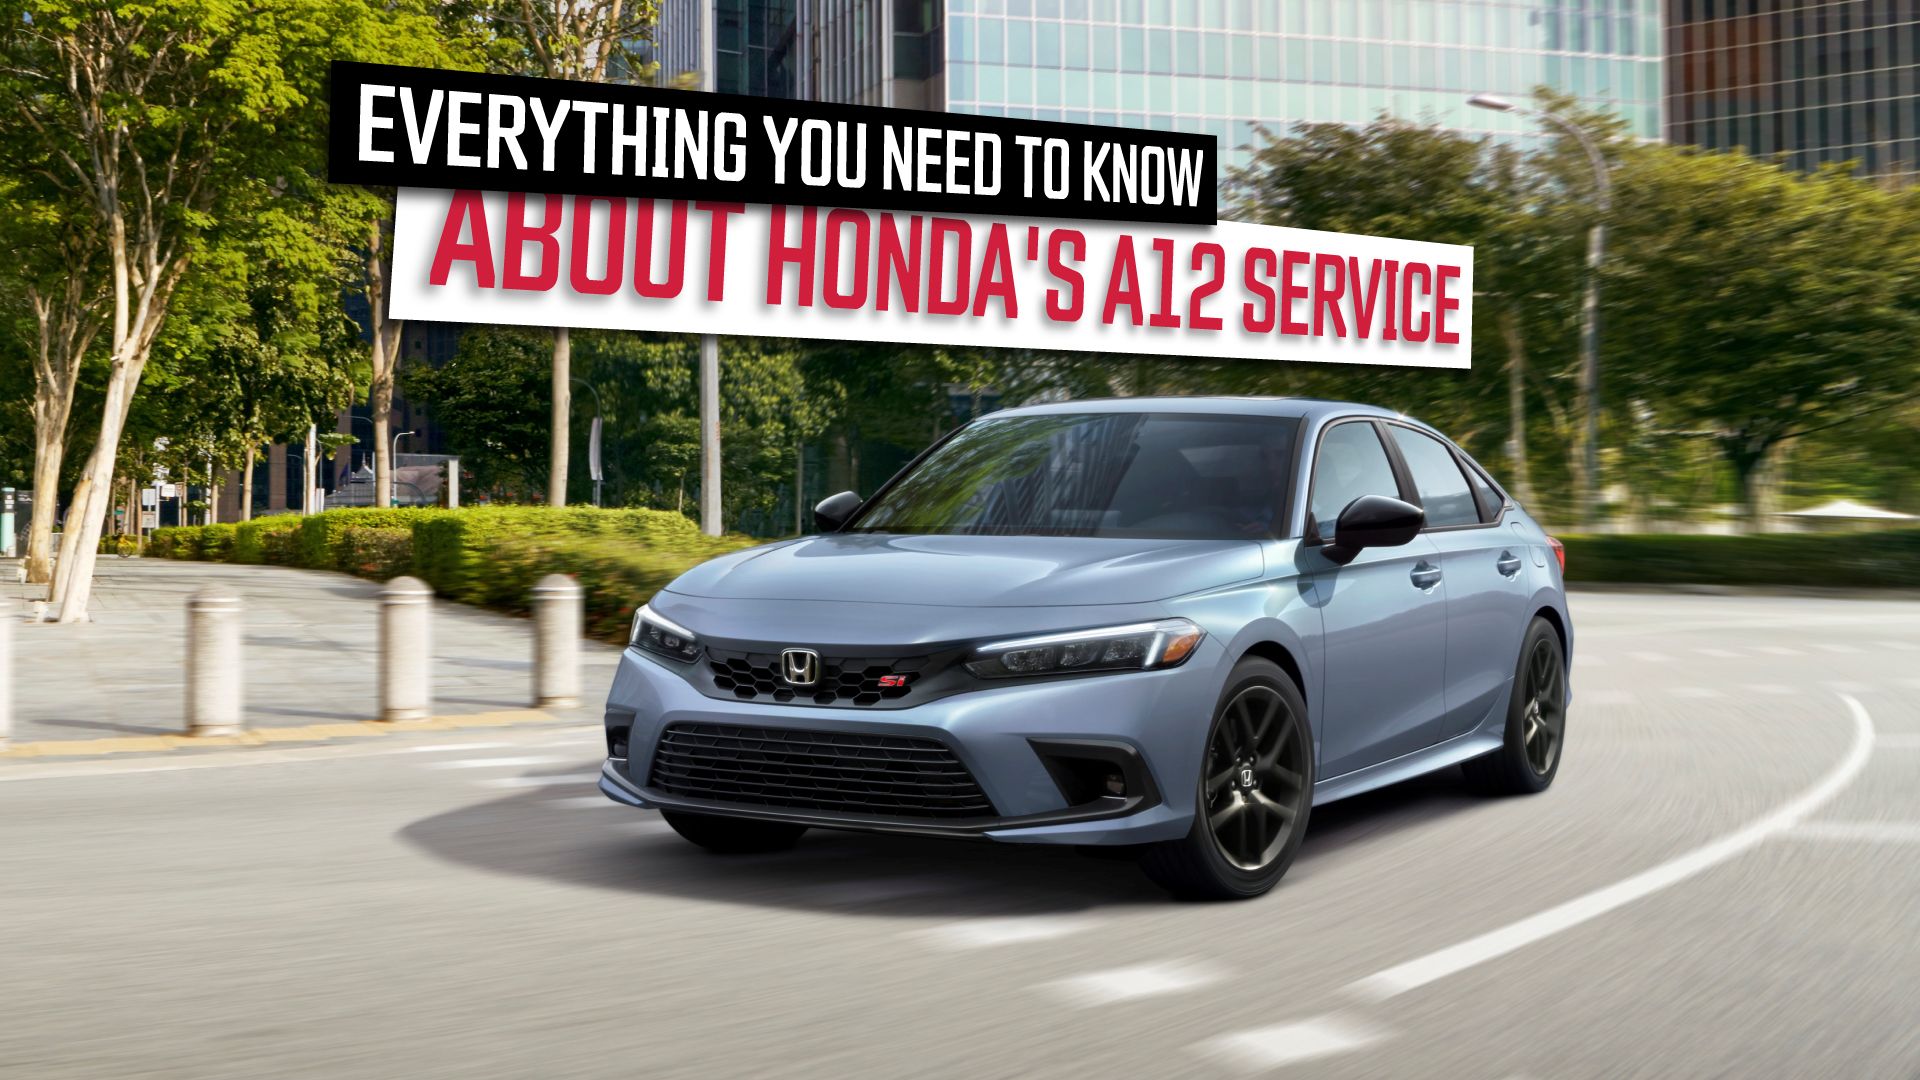 About-Honda's-A12-Service